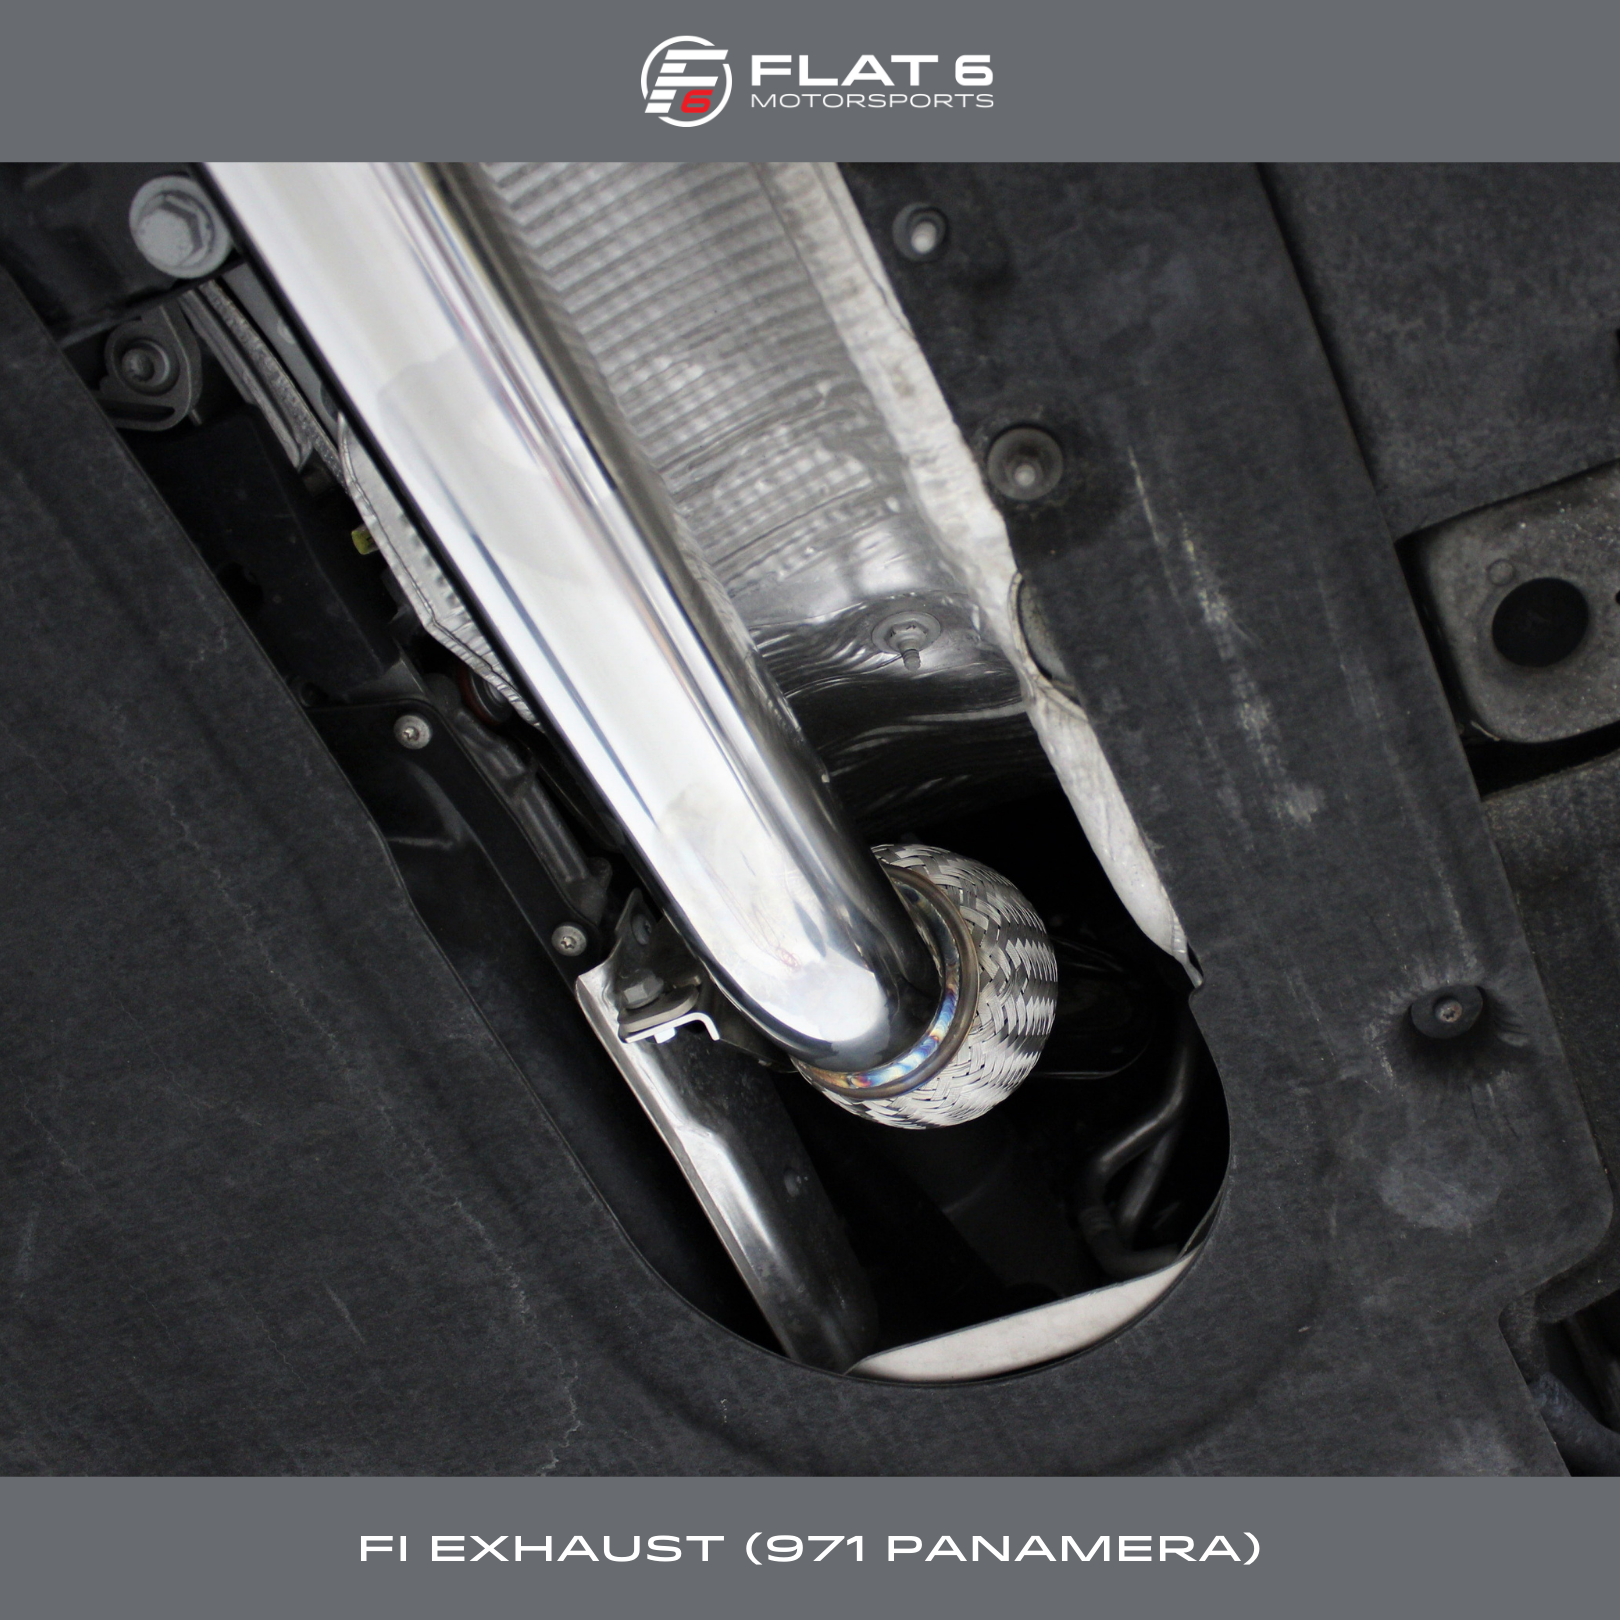 Porsche 971 Panamera Turbo - Fi Exhaust